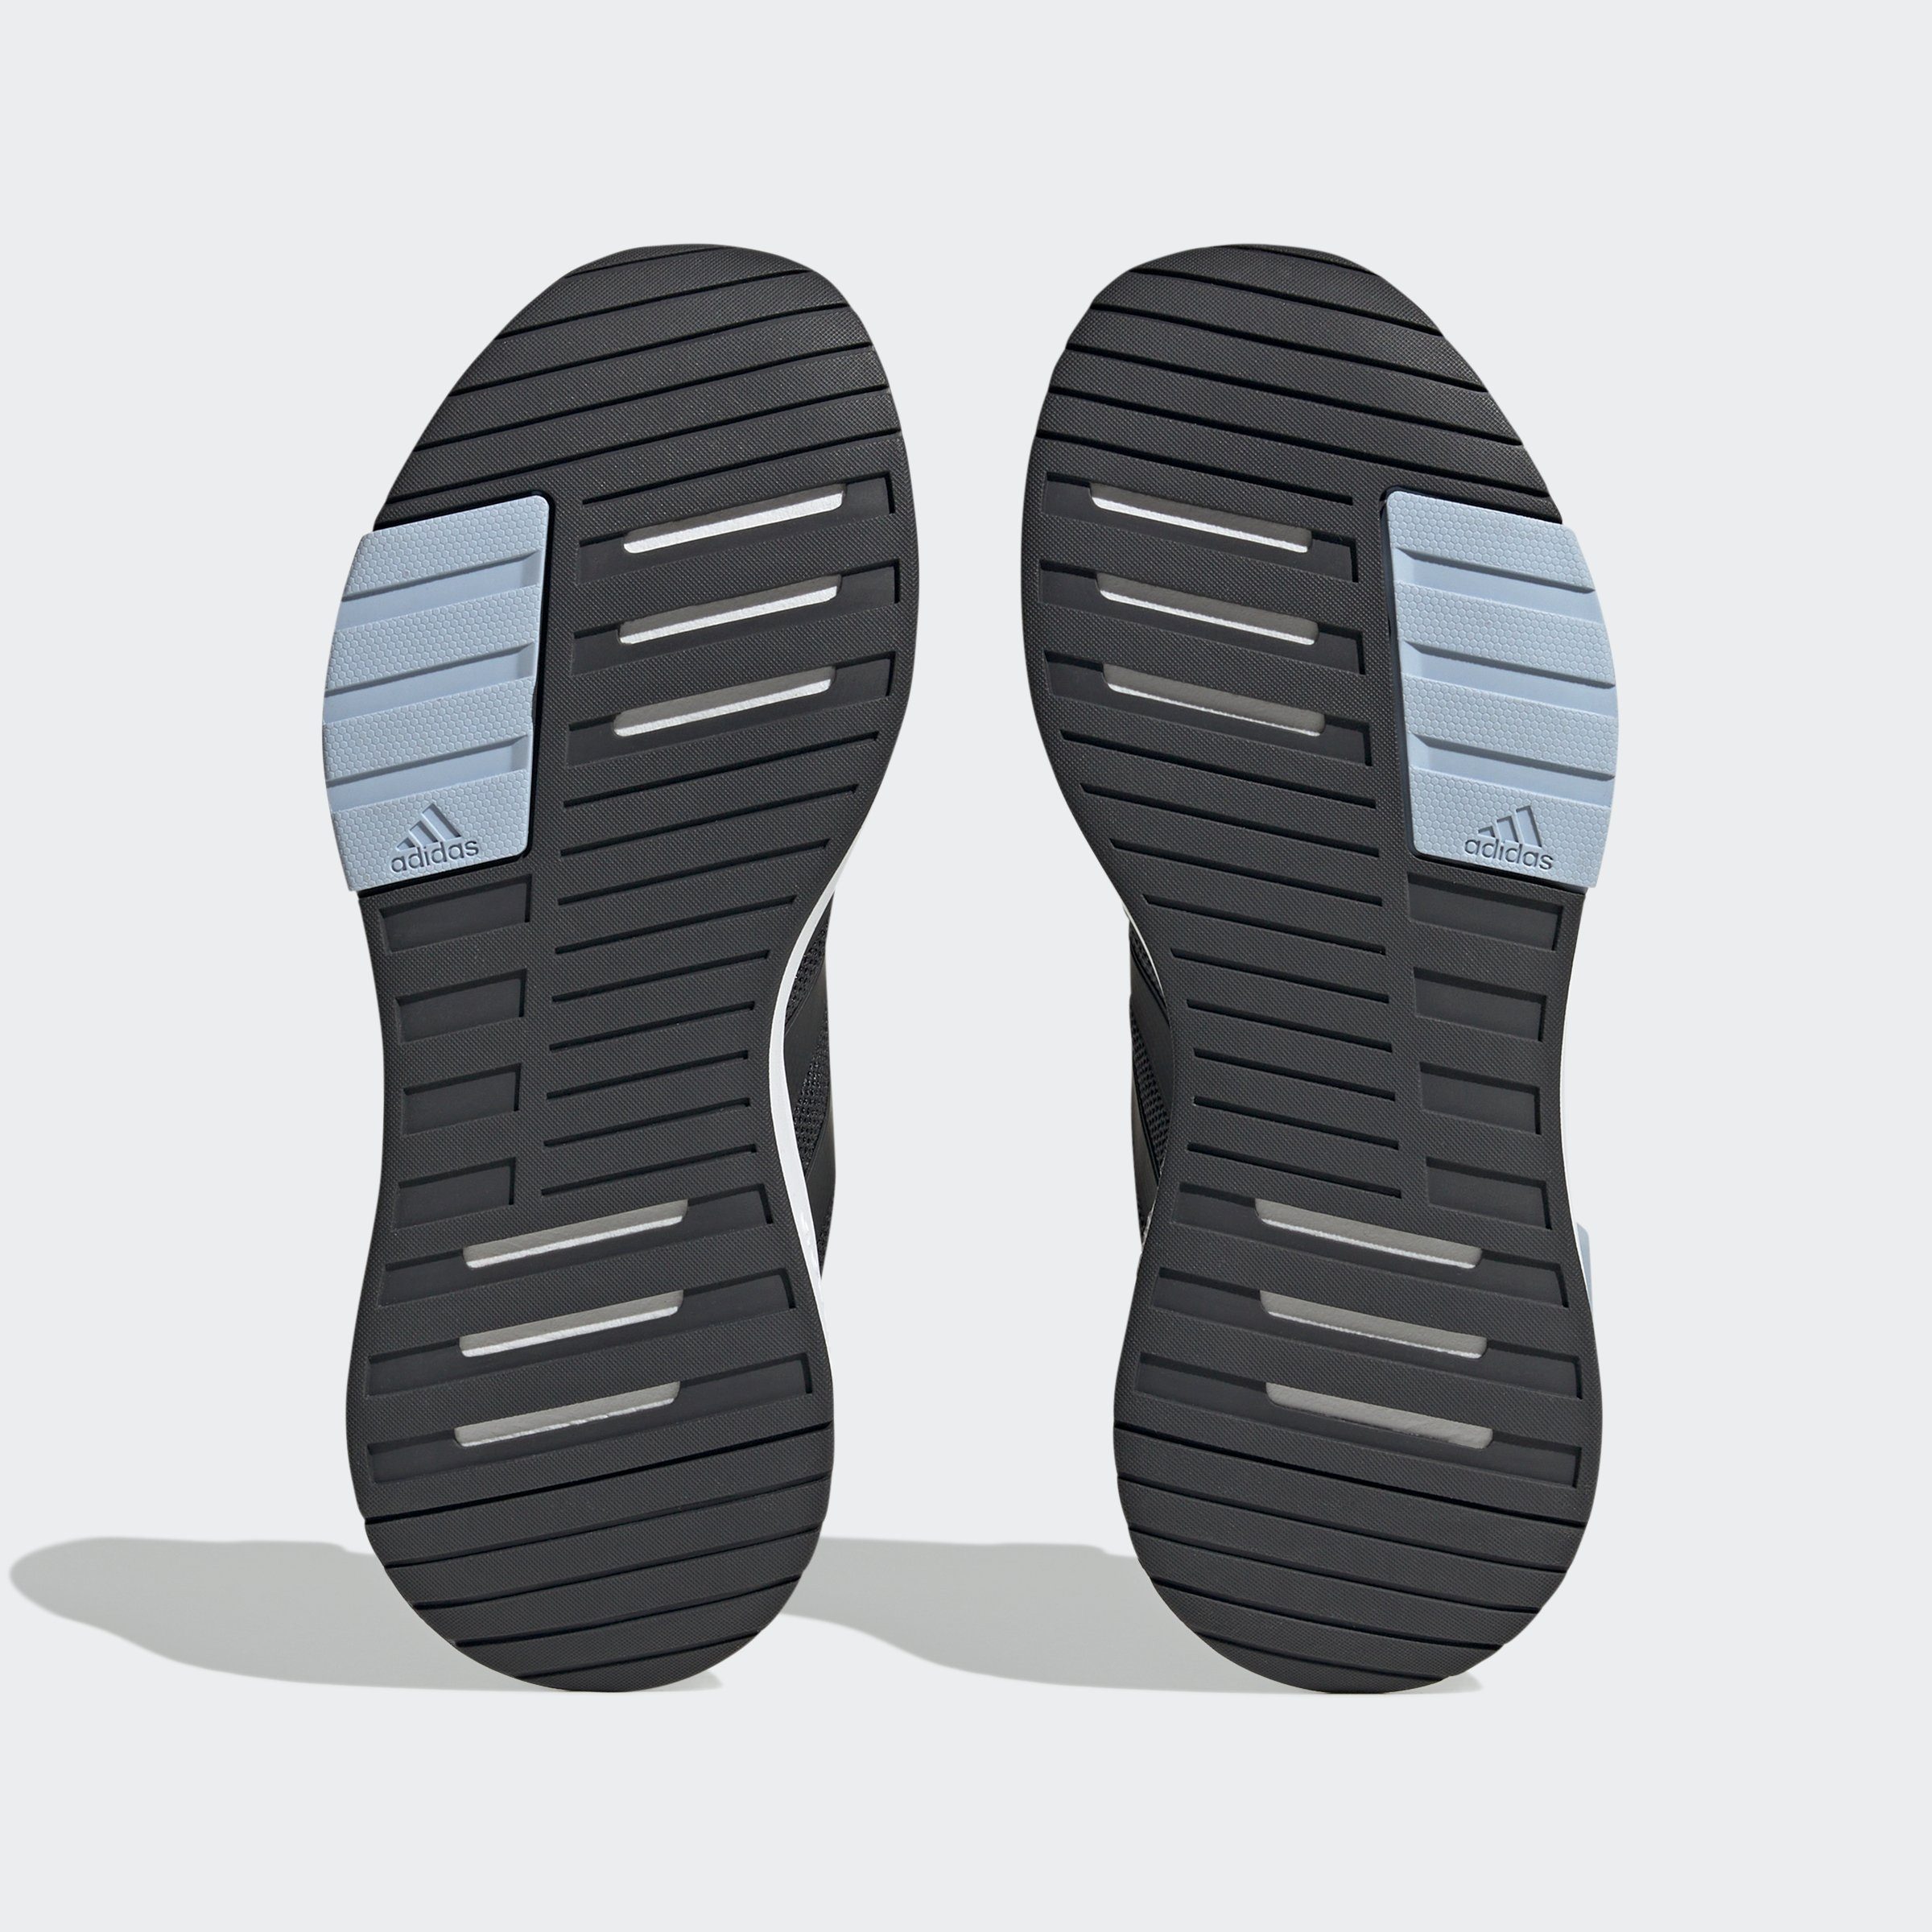 Carbon TR23 / Sneaker Dawn Sportswear / RACER adidas Carbon Blue